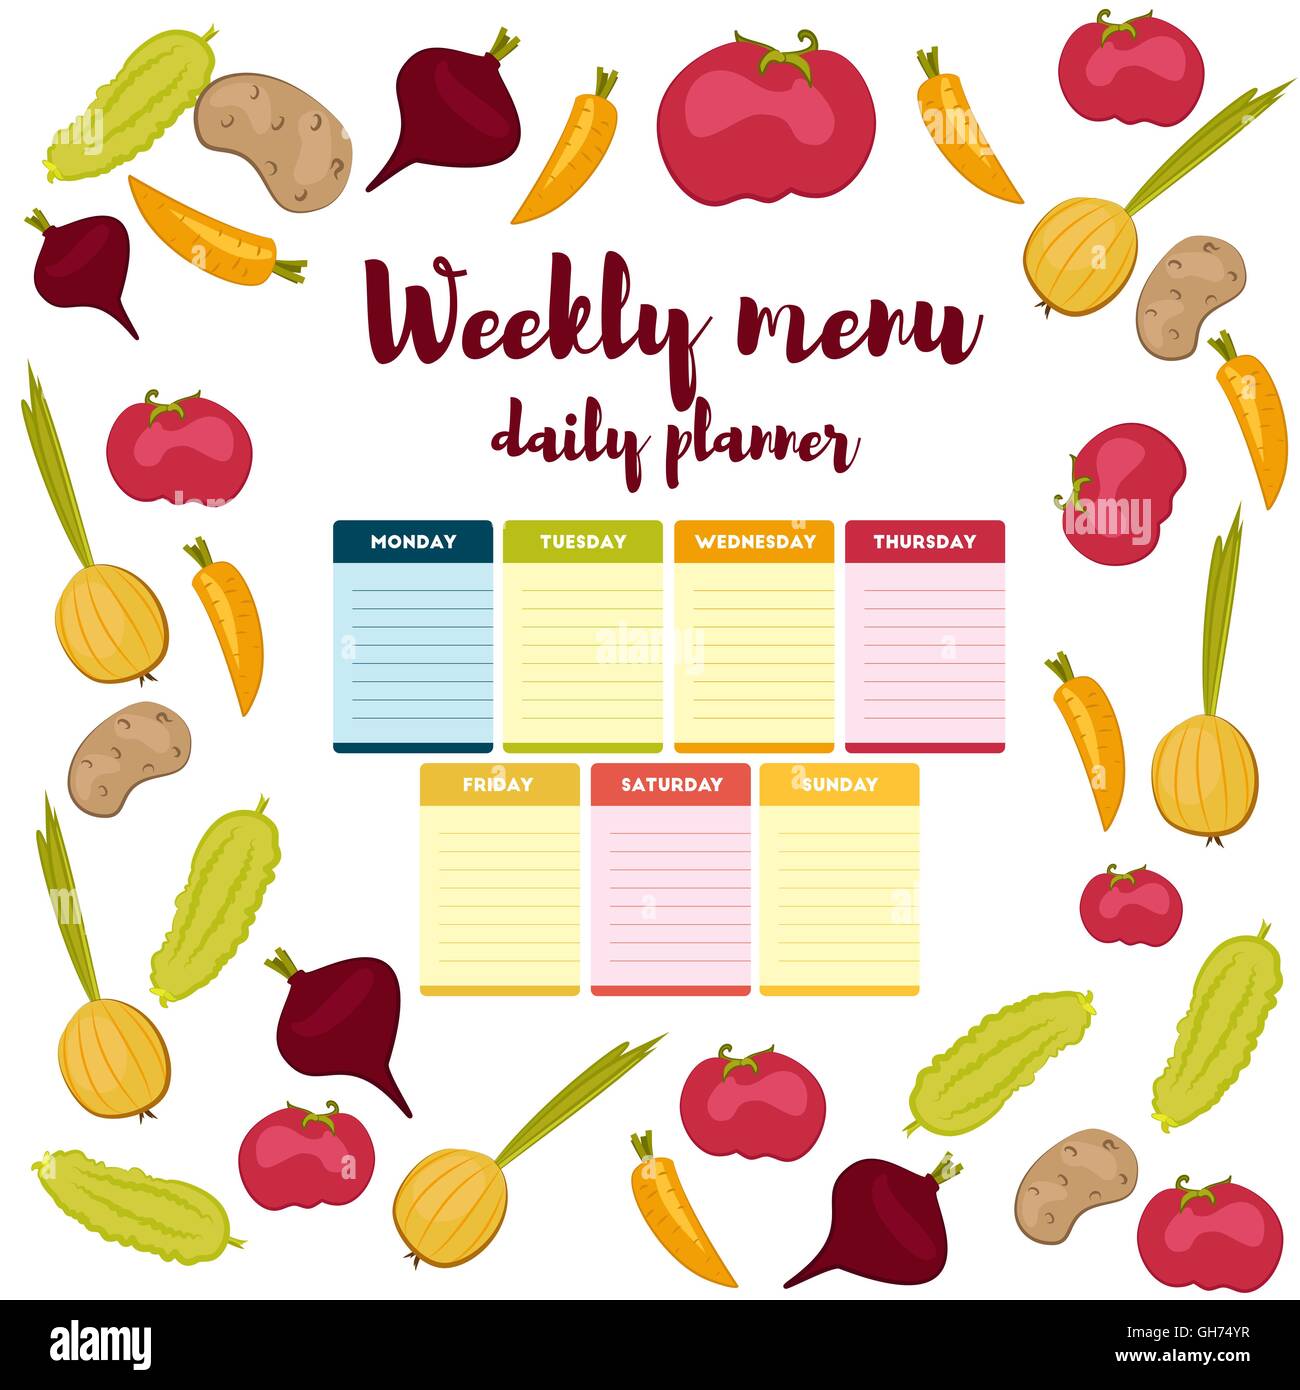 Weekly menu daily planner Stock Vector Image & Art - Alamy